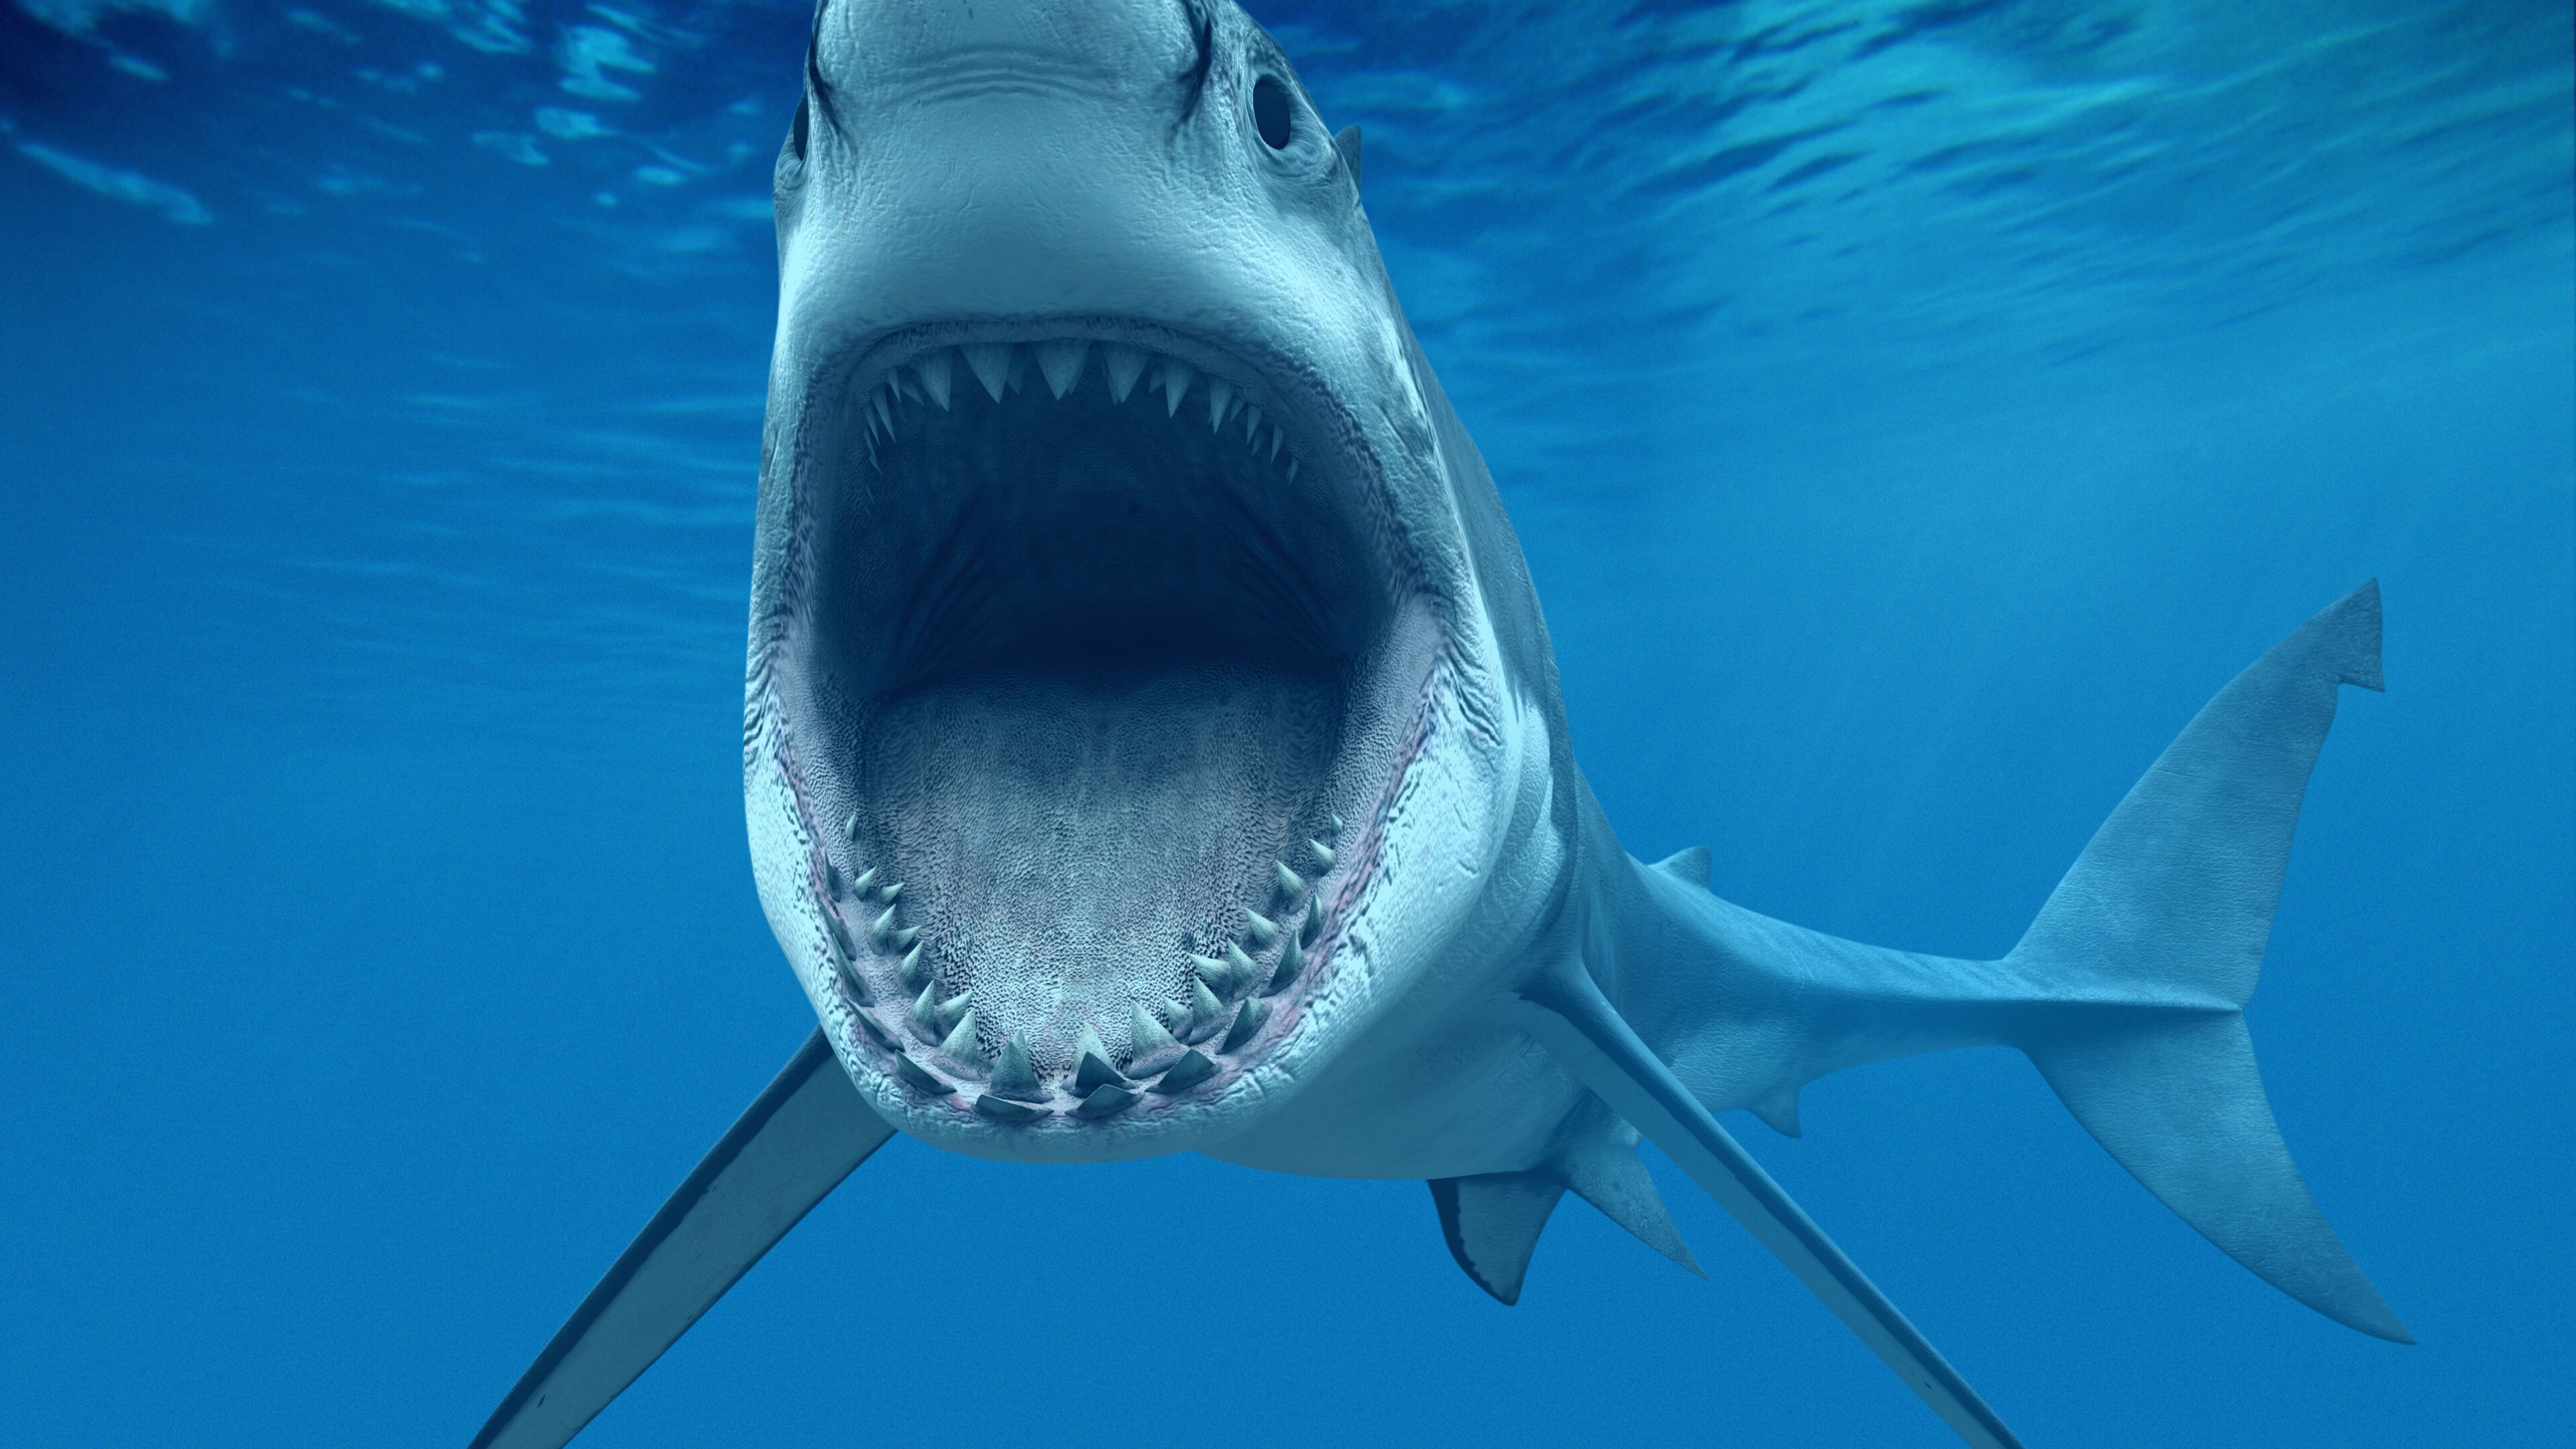 HD wallpaper, Underwater Sharks, Desktop 4K Shark Wallpaper Photo, Dangerous Predators, King Of The Sea, 4K Background Image, 3840X2160 4K Desktop